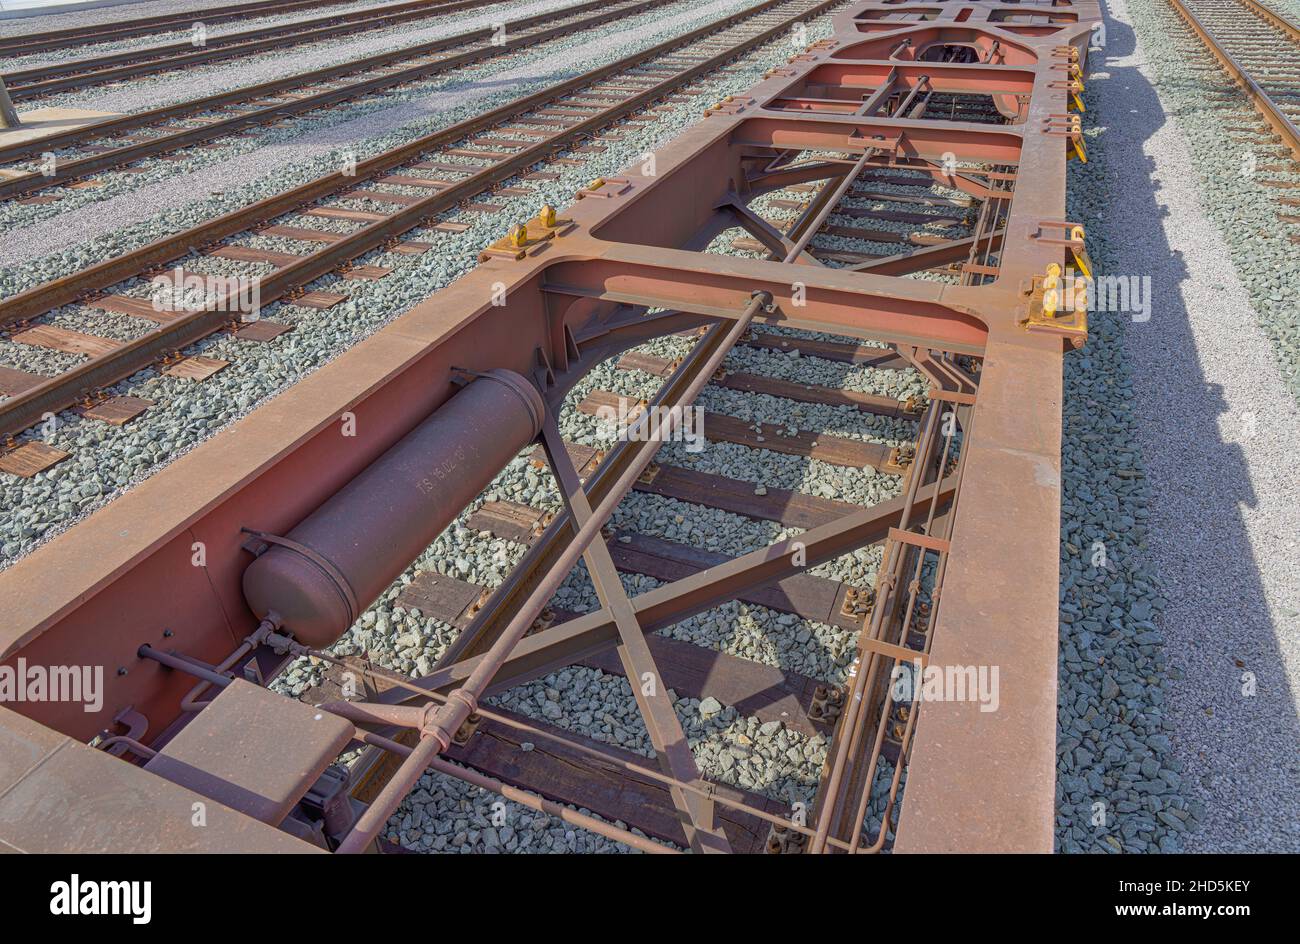 Freight train on the railroad tracks Stock Photo